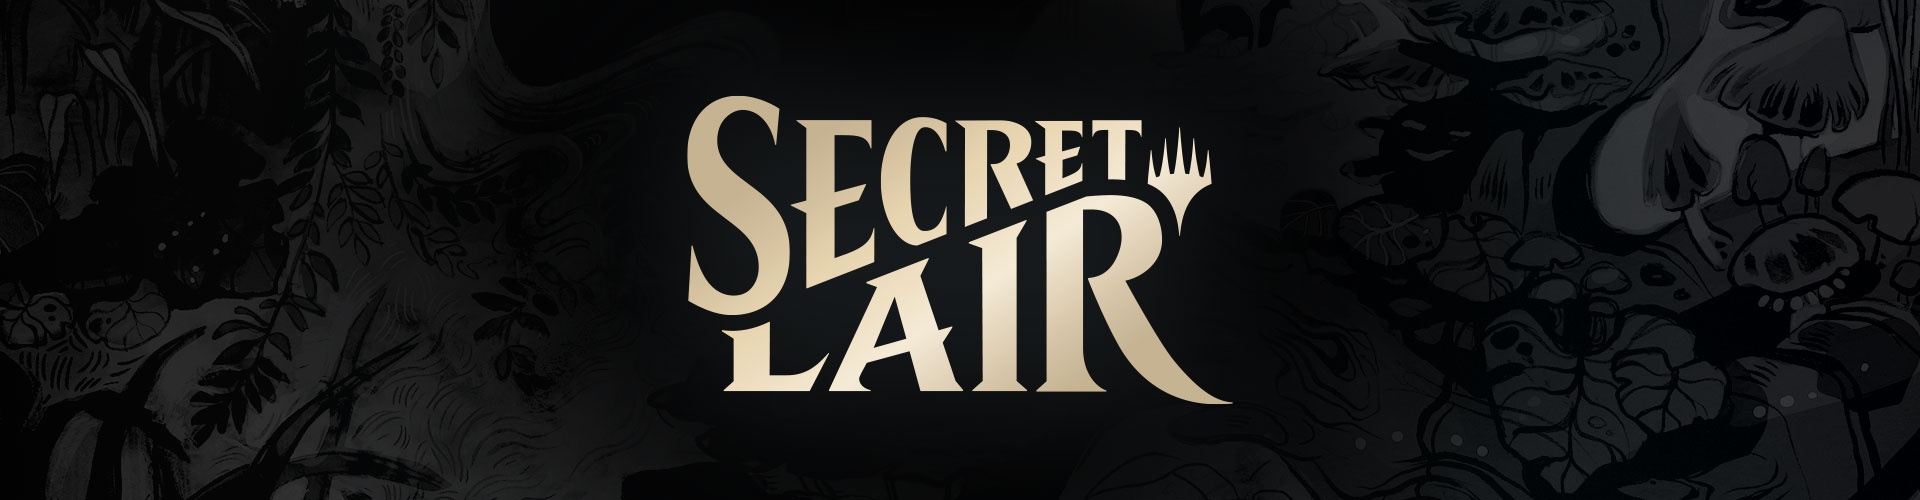 Secretversary 2021 and Secret Lair Commander Deck Delays Announced